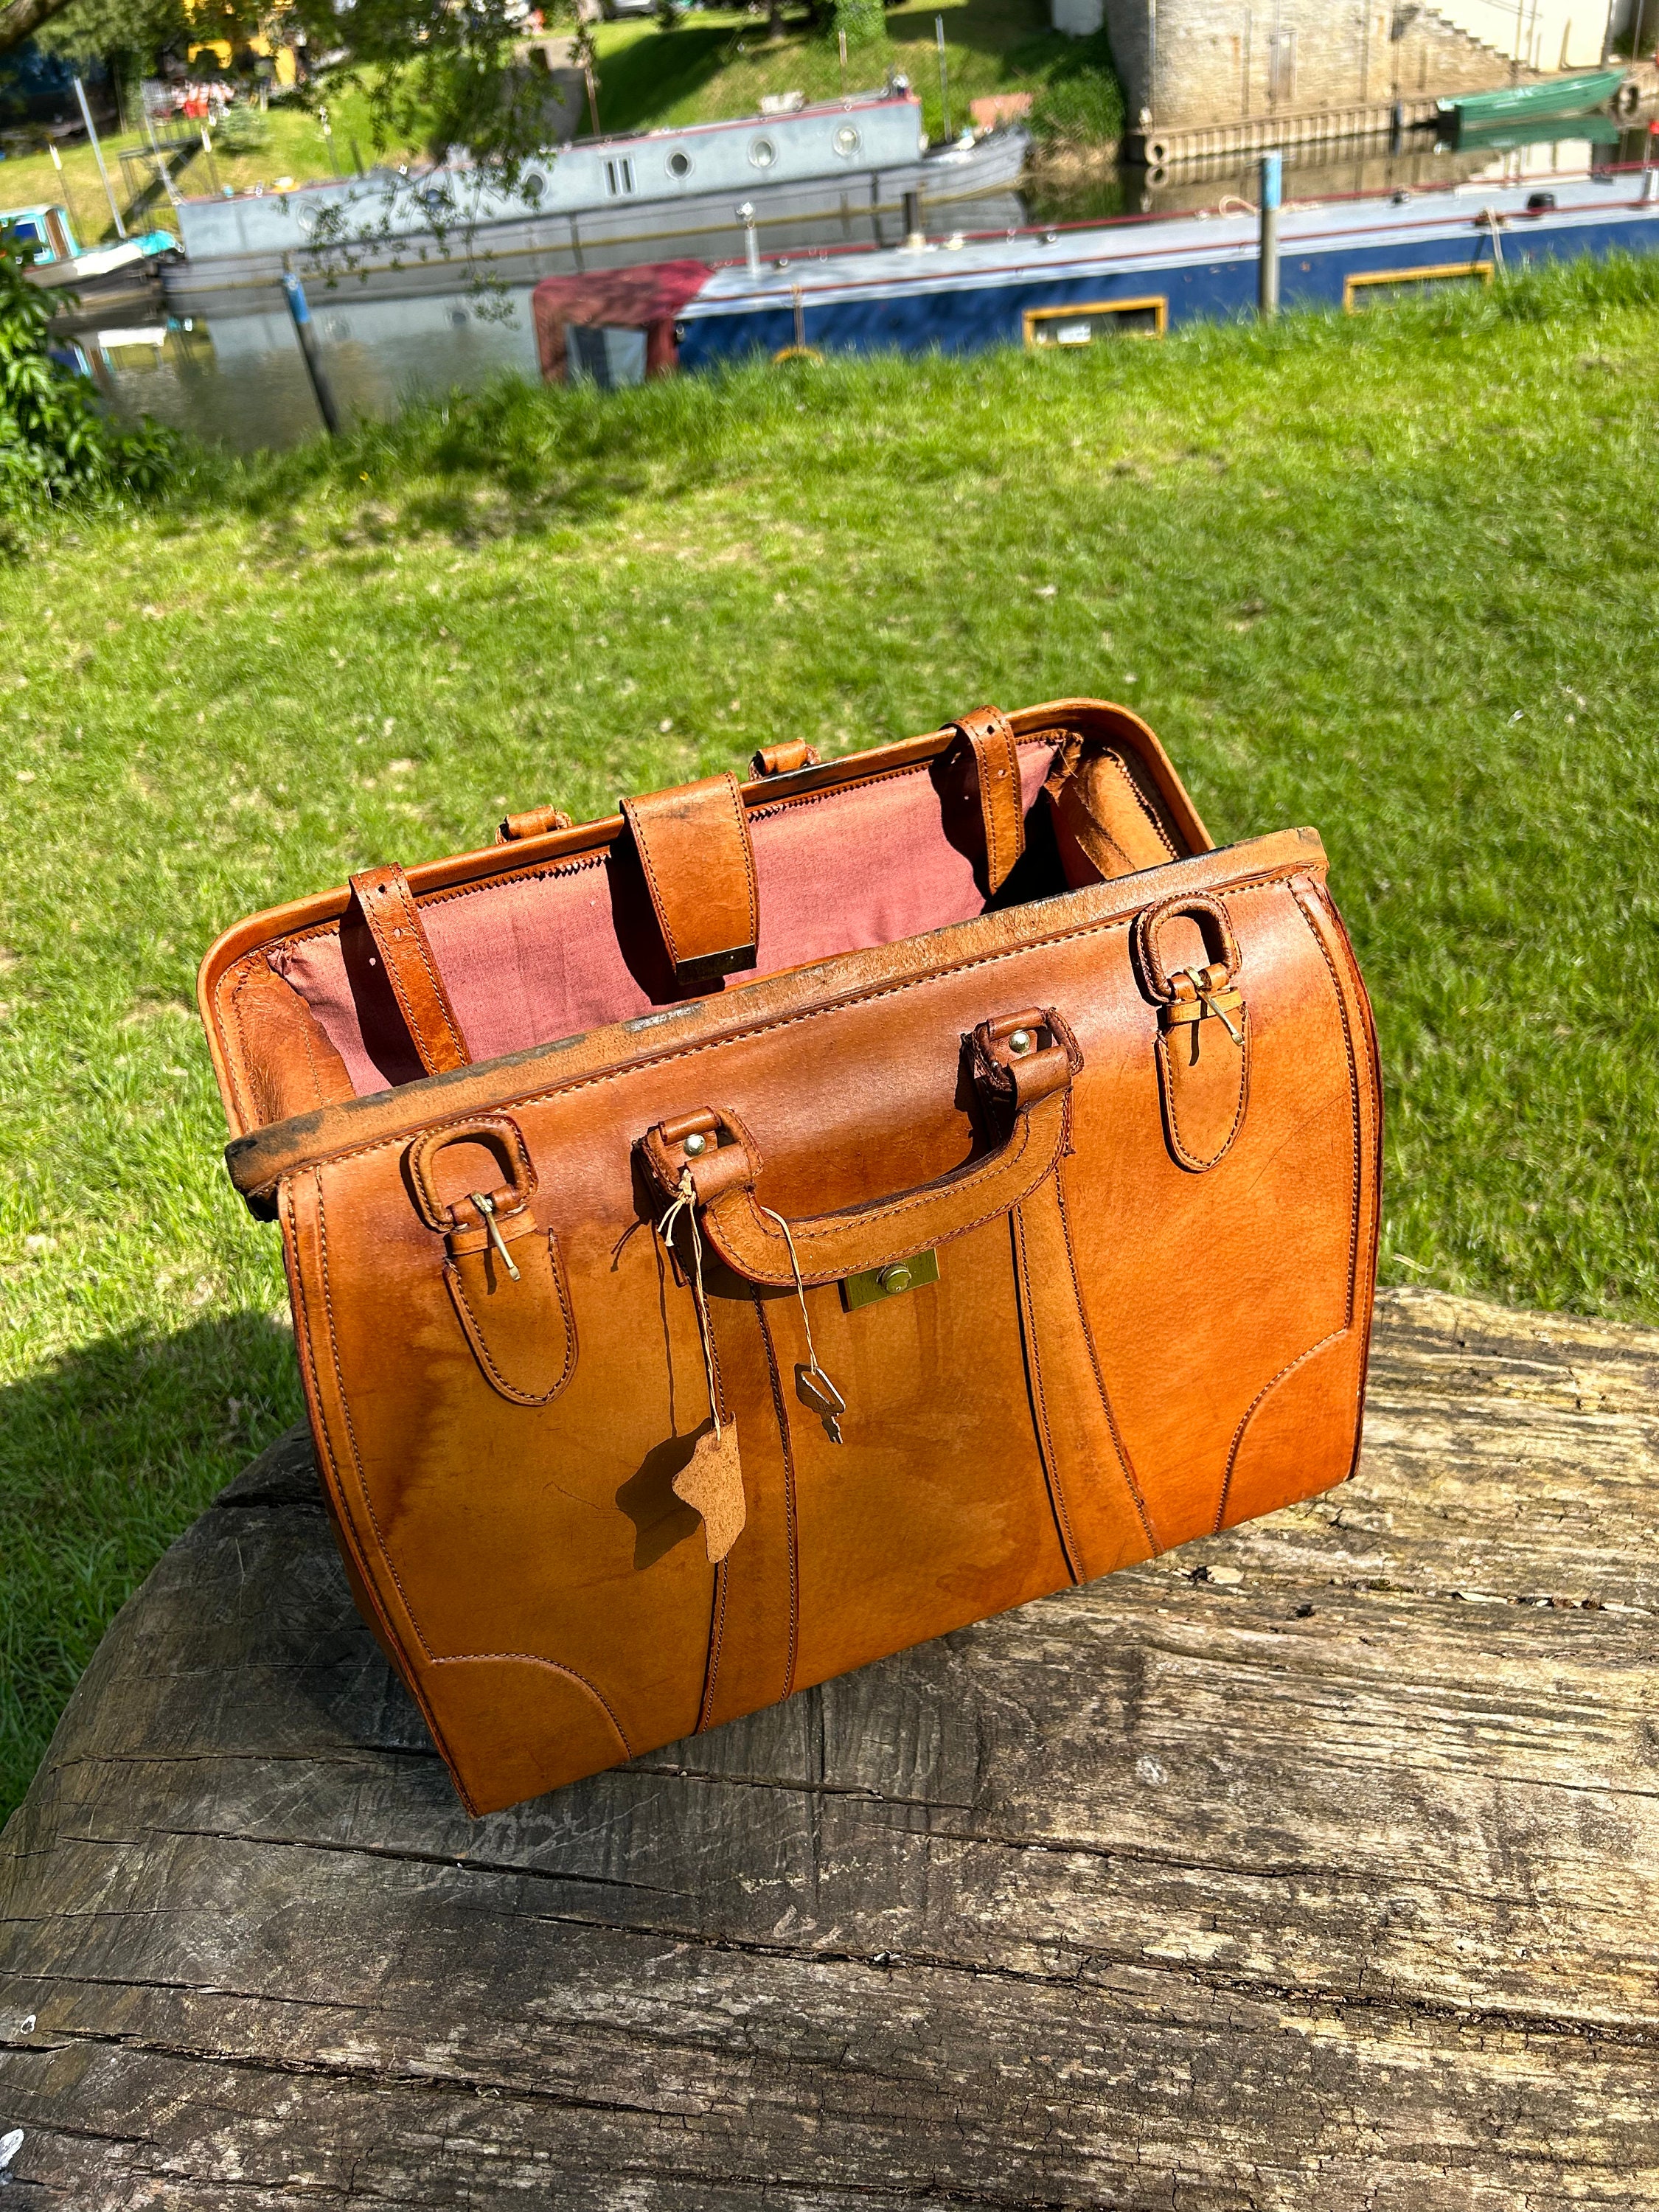 Leather Doctor Gladstone Bag - Monalisa - Domini Leather